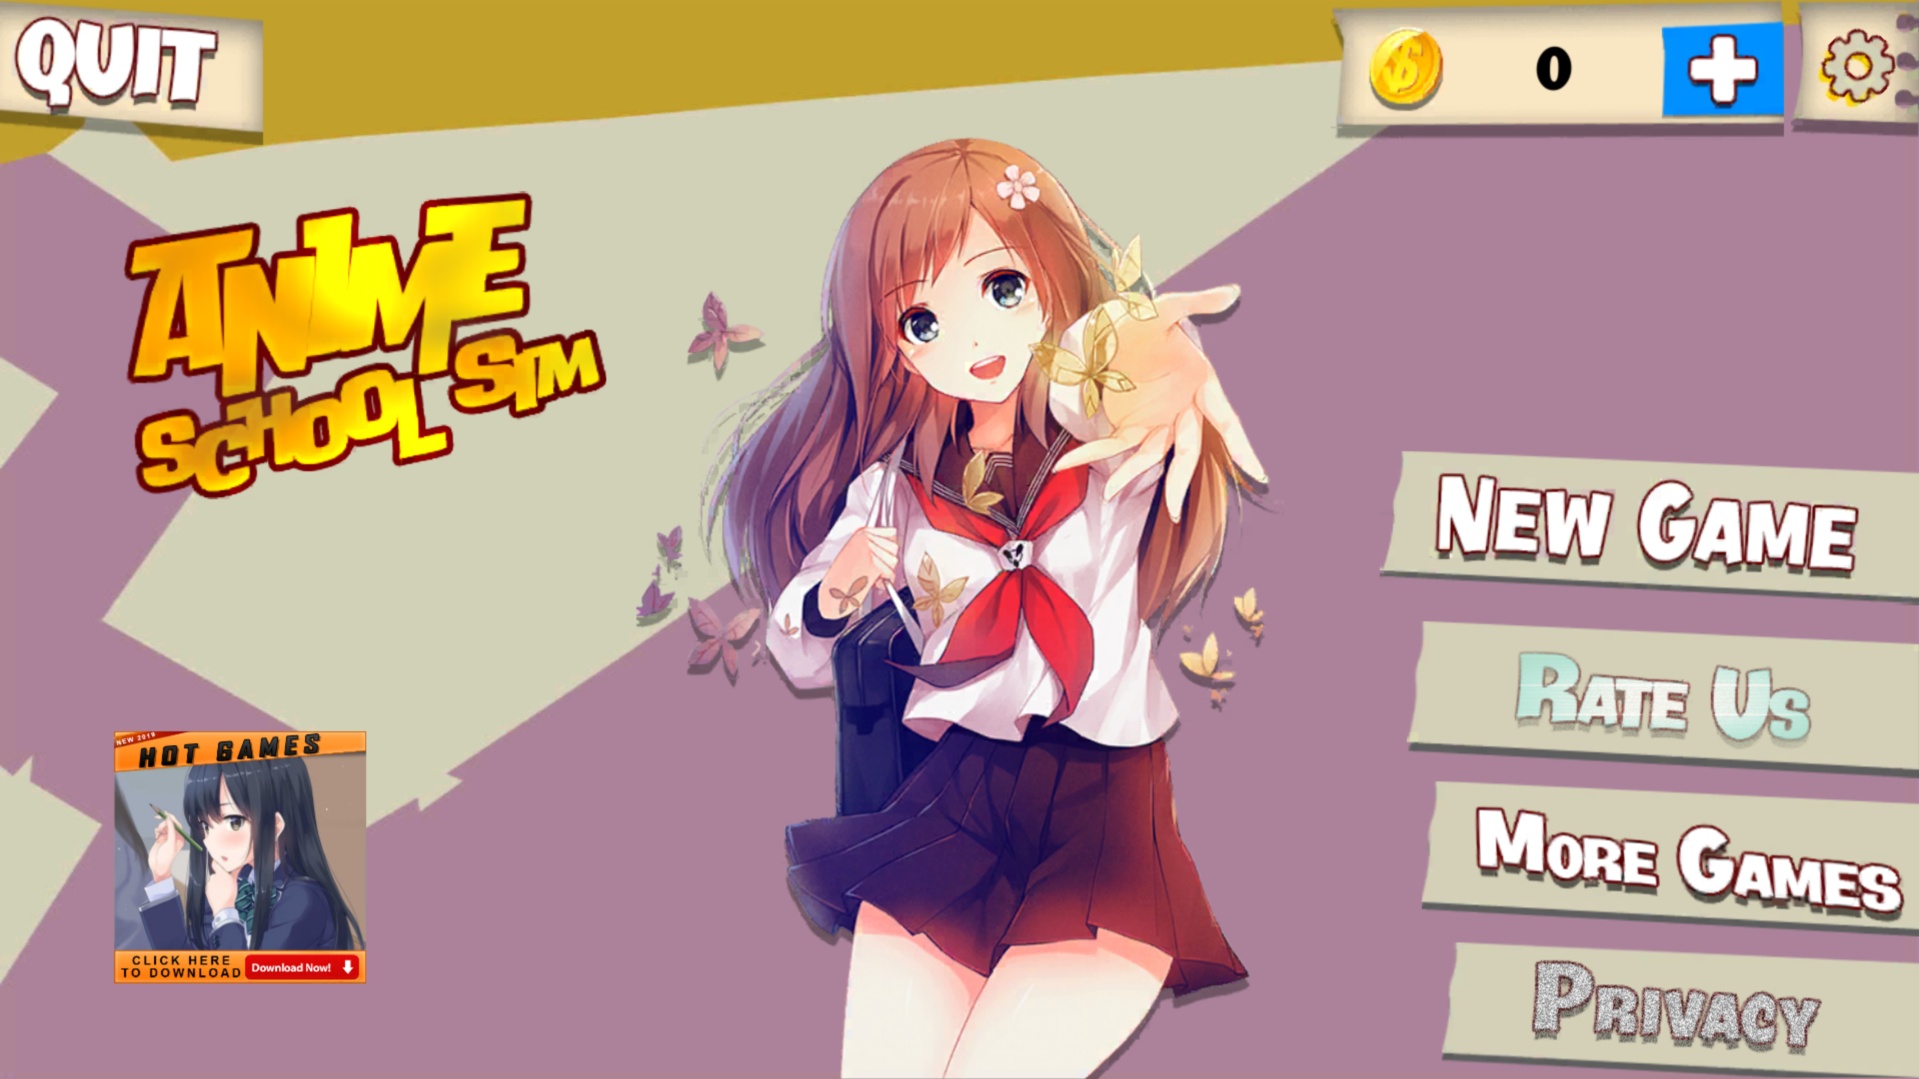 Anime Fake call - Anime Simulator APK for Android Download